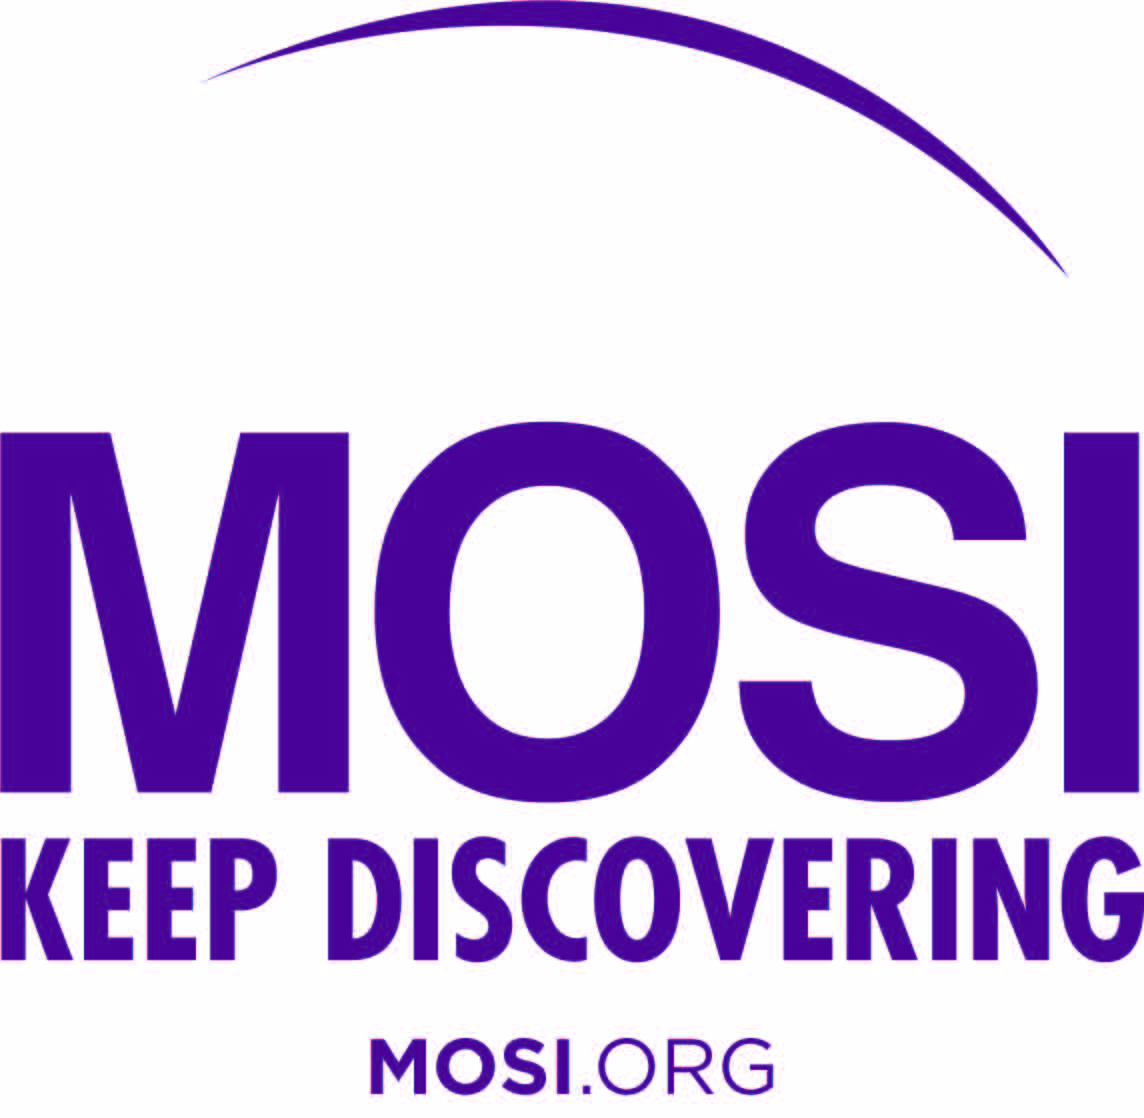 MOSI_Logo_Tag_Purple.jpg